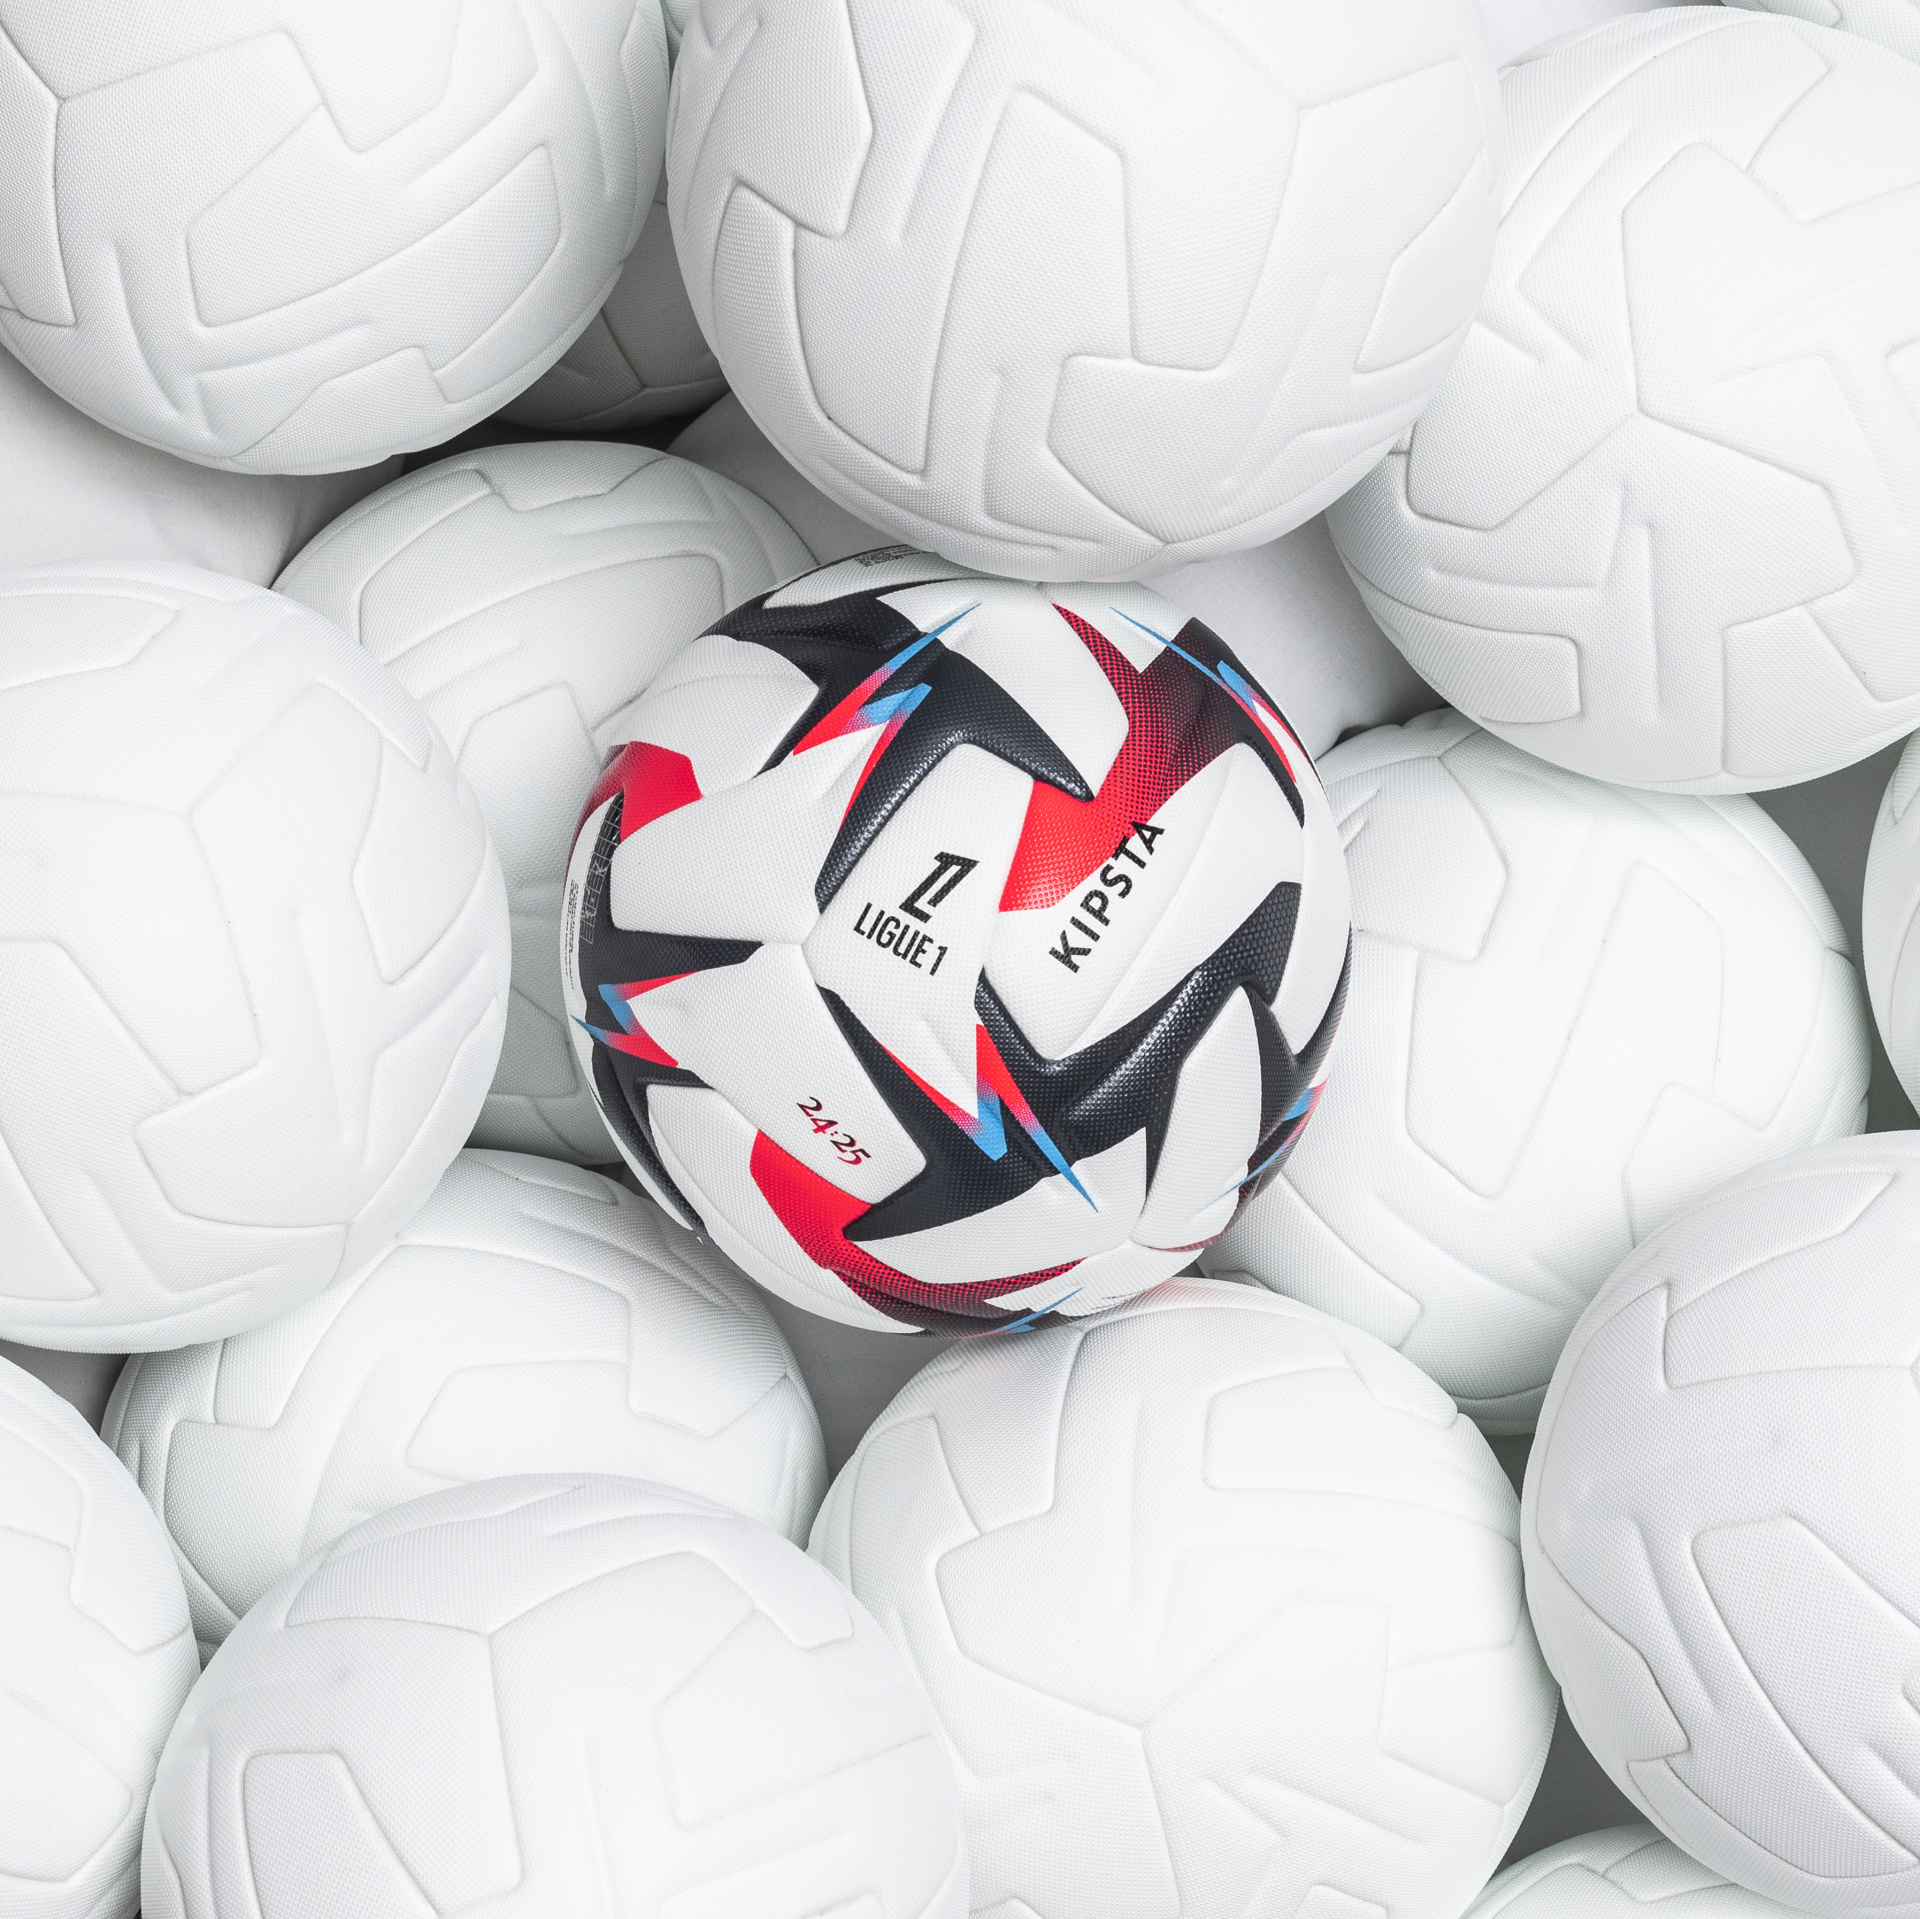 New official Kipsta ball for Ligue 1 BKT